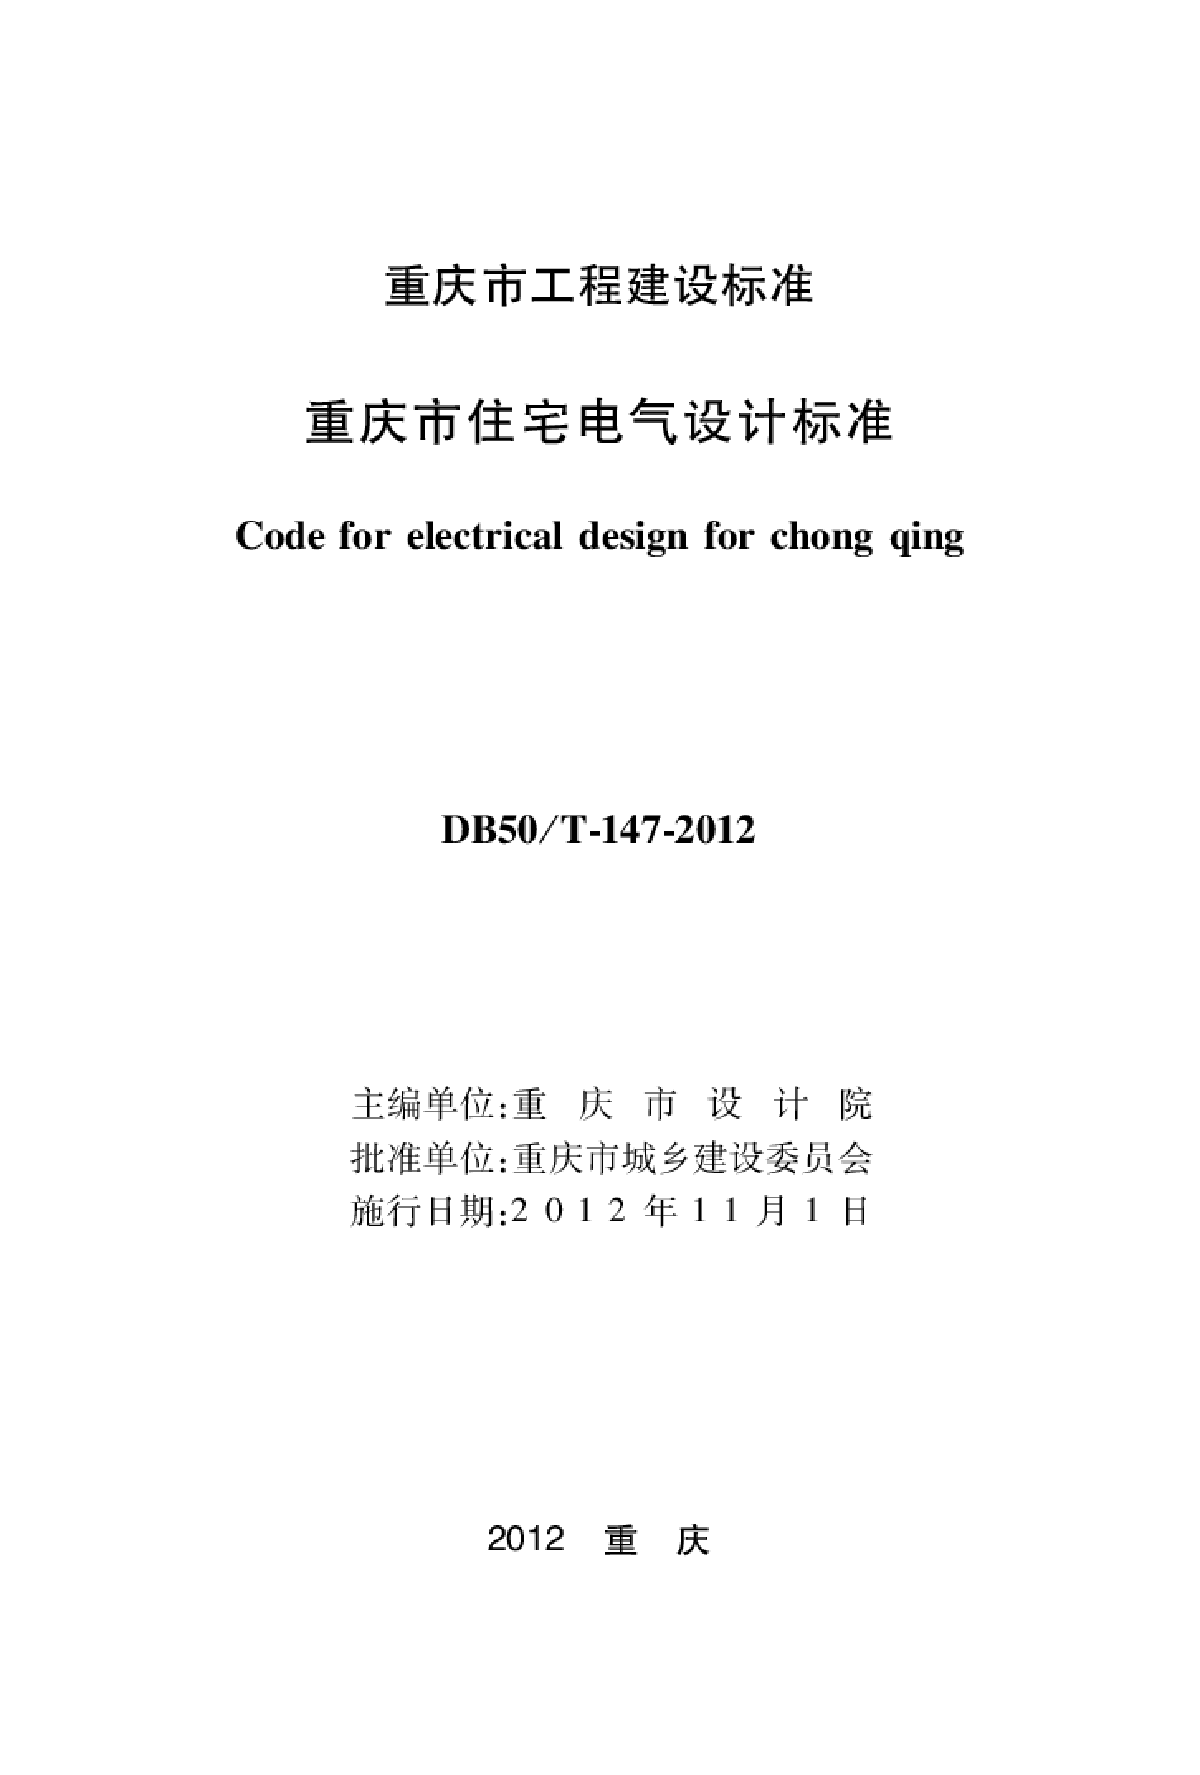 DBJ50T-147-2012重庆市住宅电气设计标准